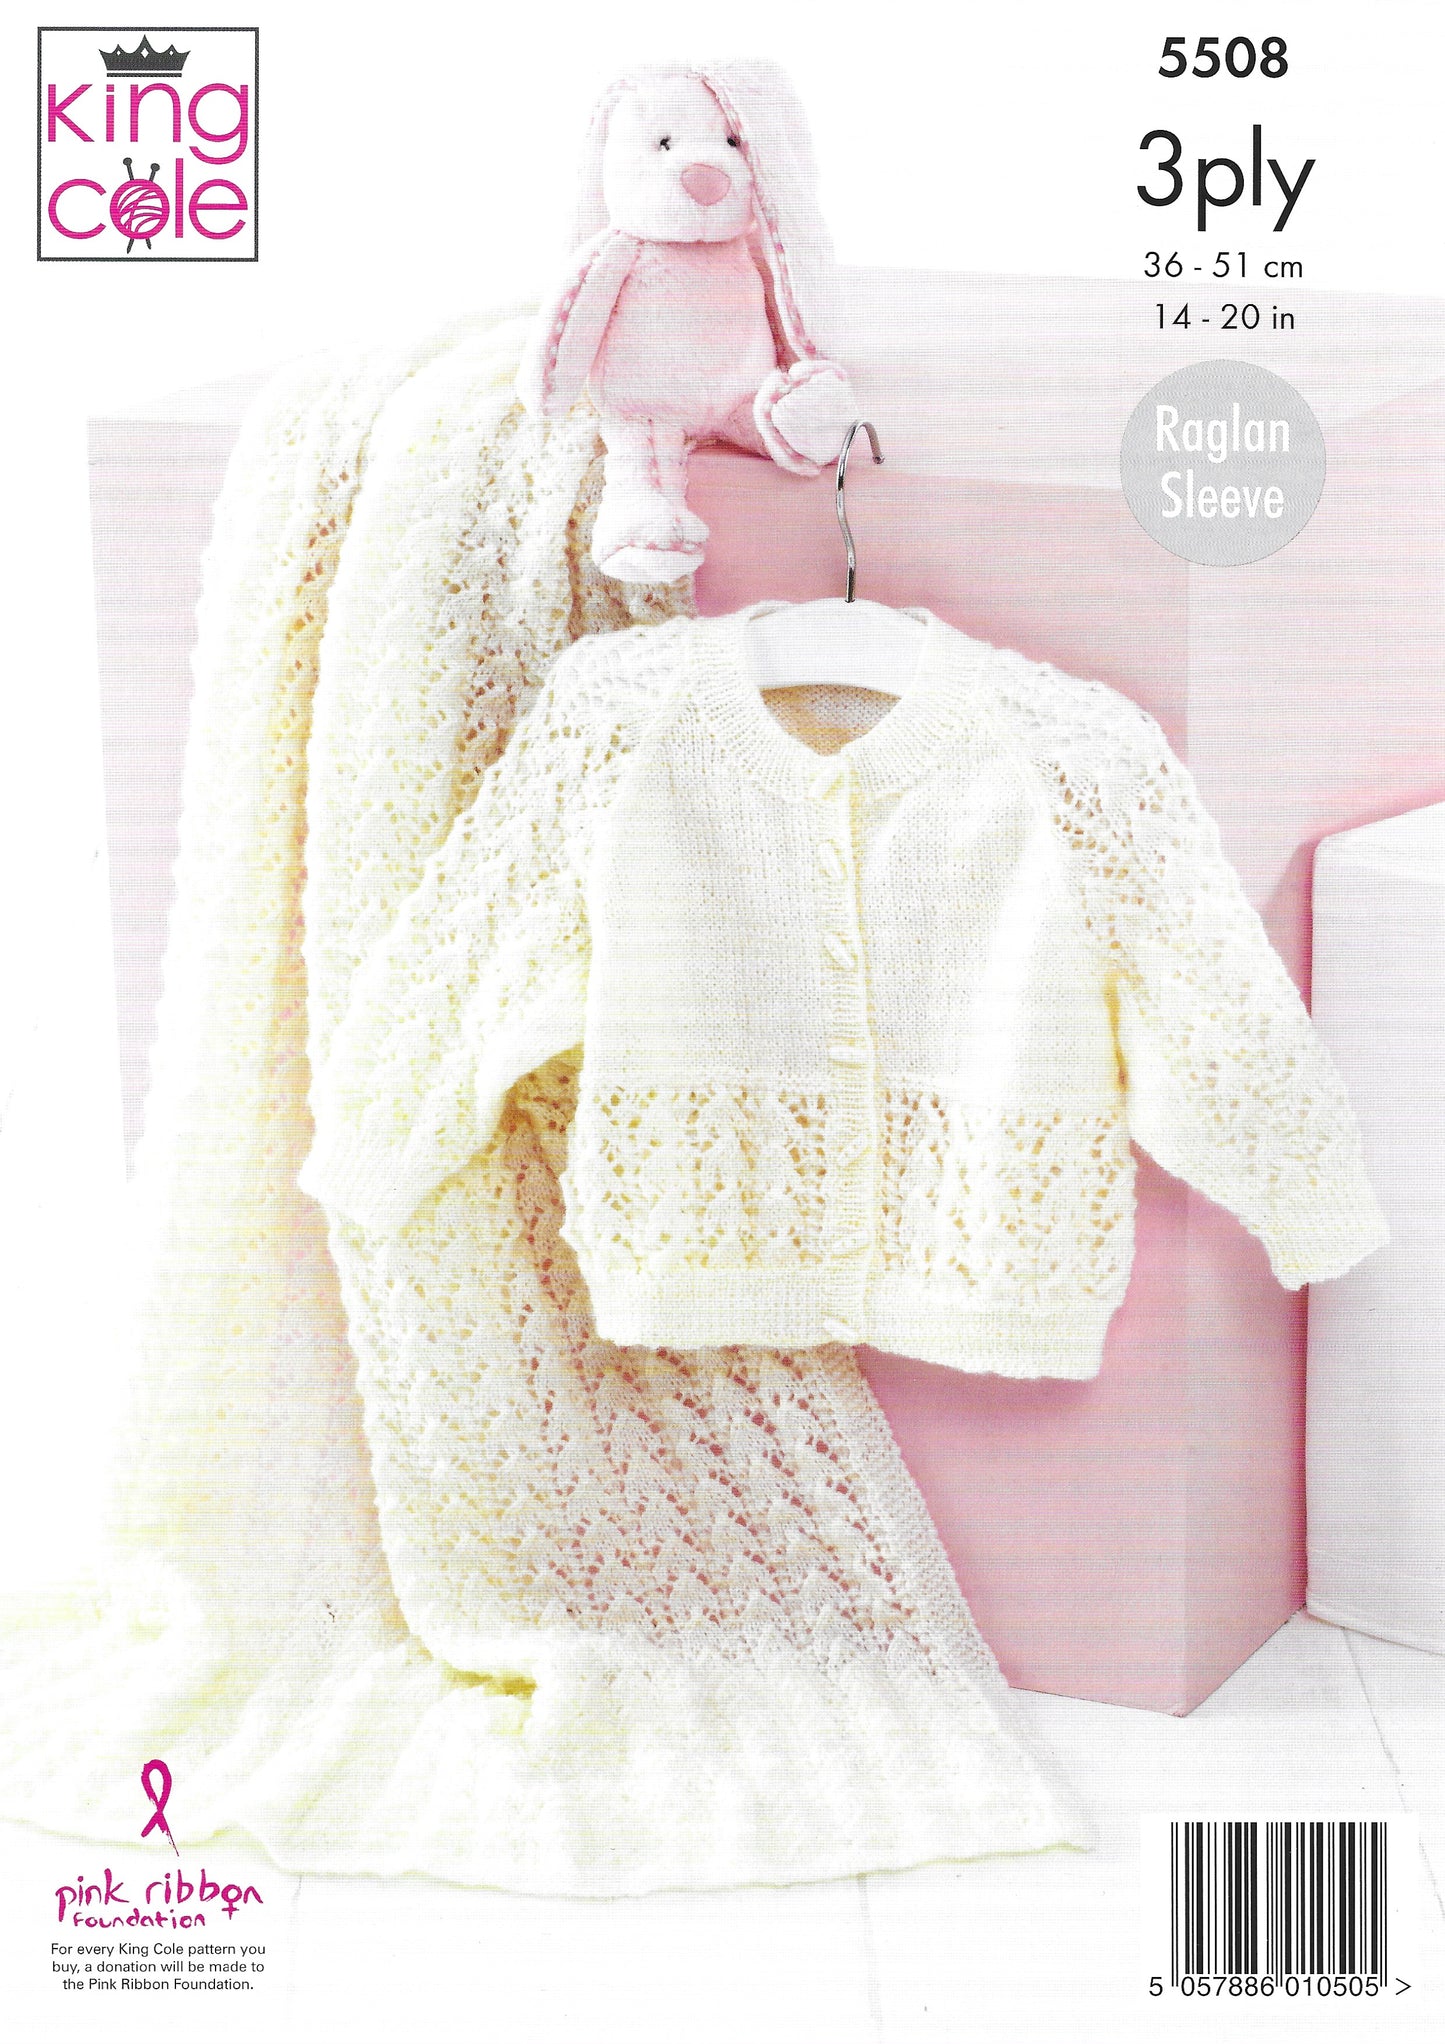 King Cole 5508 Cardigan & Blanket, Raglan Sleeve, 3ply Knitting Pattern